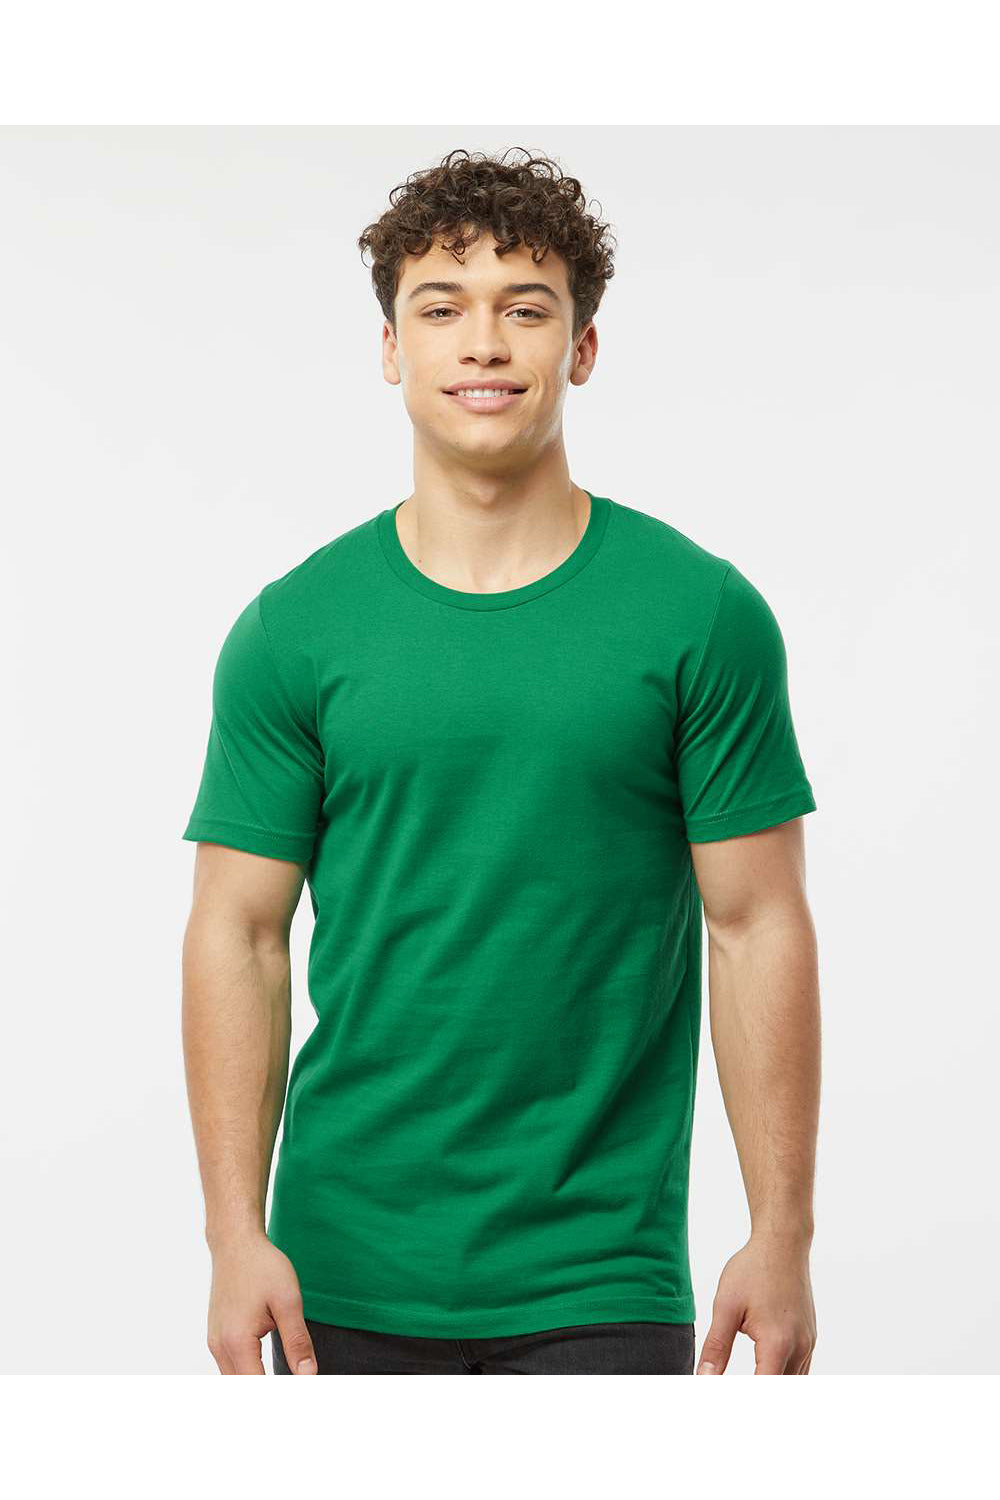 Tultex 502 Mens Premium Short Sleeve Crewneck T-Shirt Kelly Green Model Front